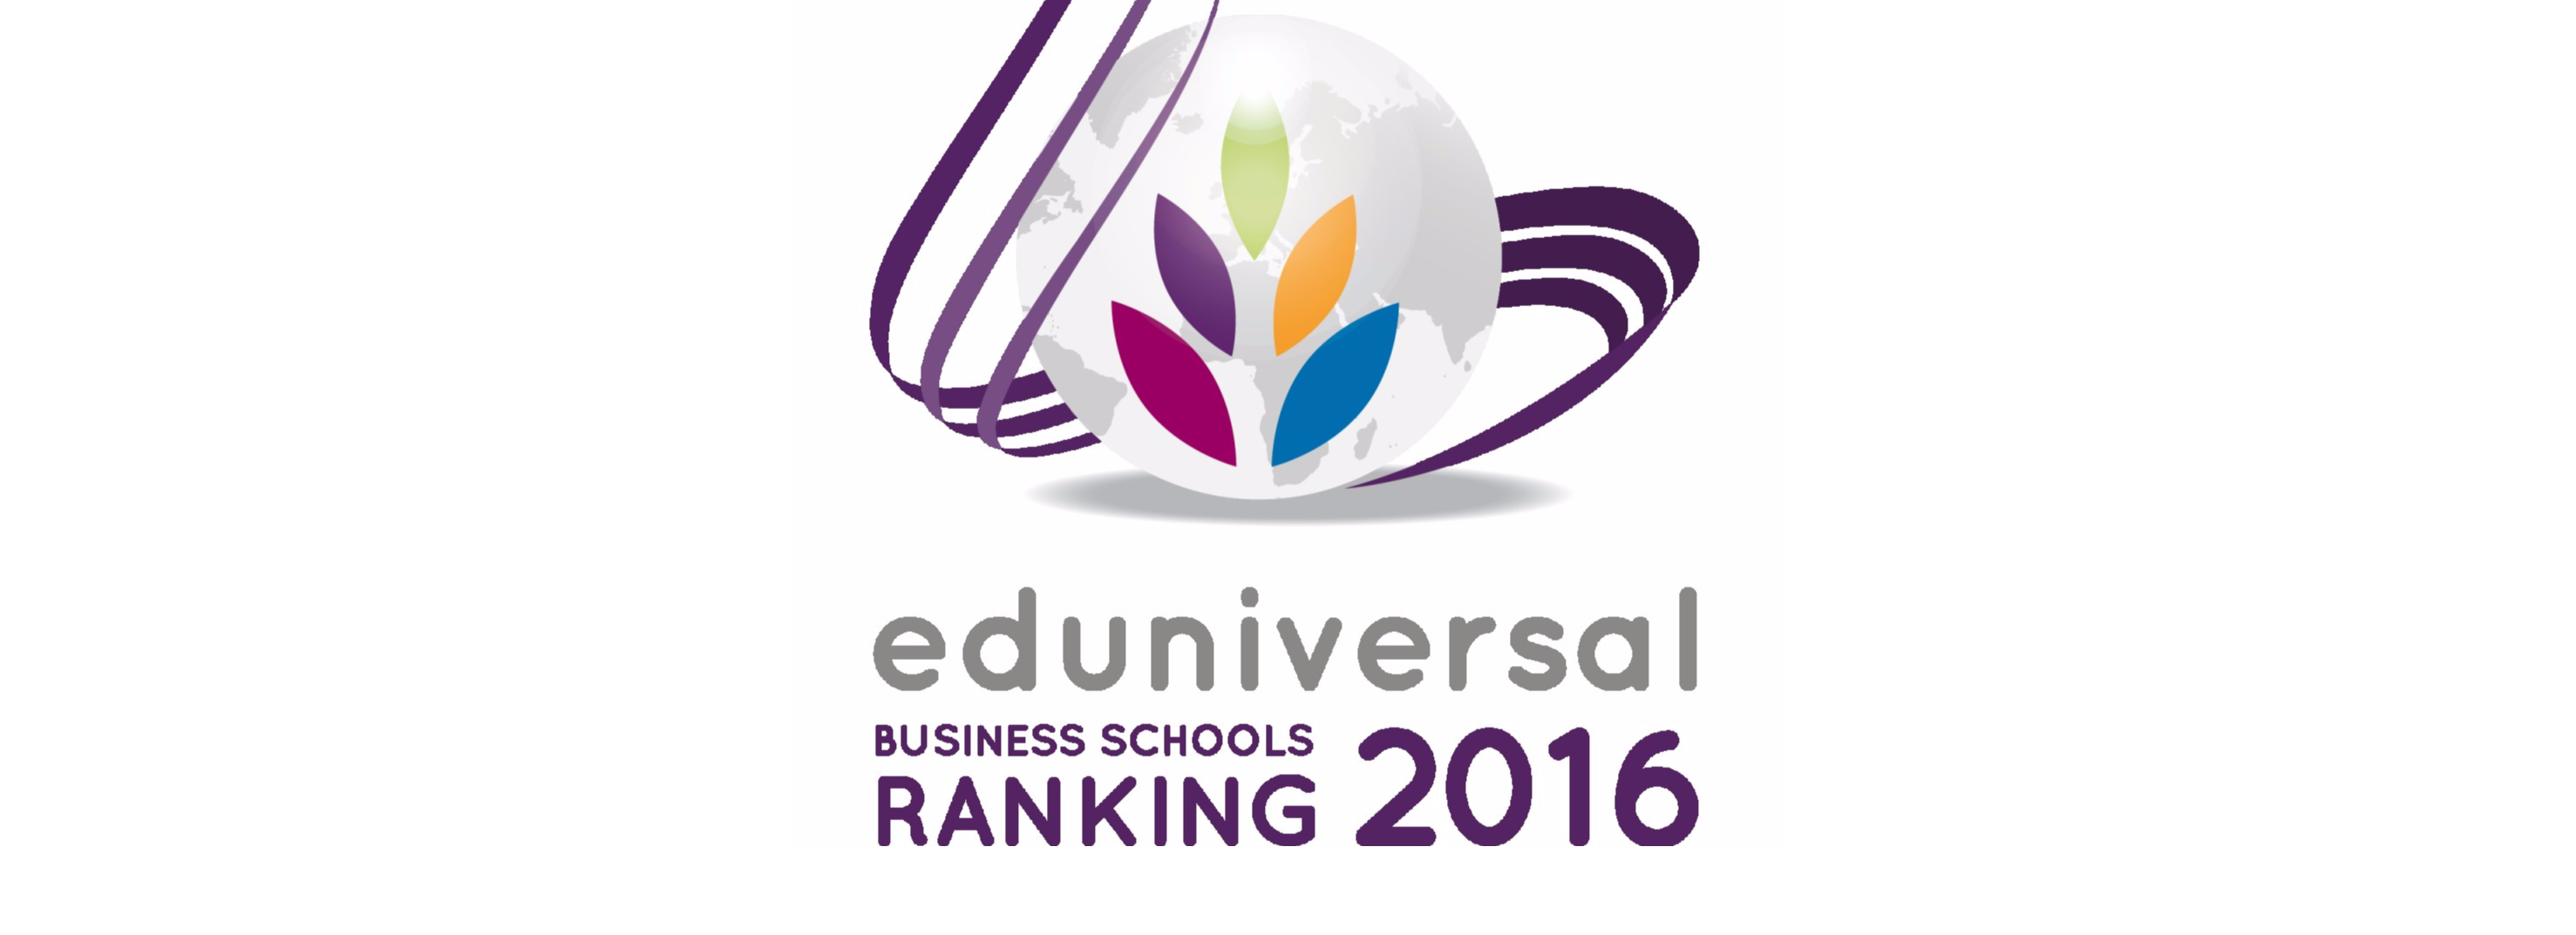 UC3M Business distinguida con 4 palmas en el ranking Eduniversal 2016